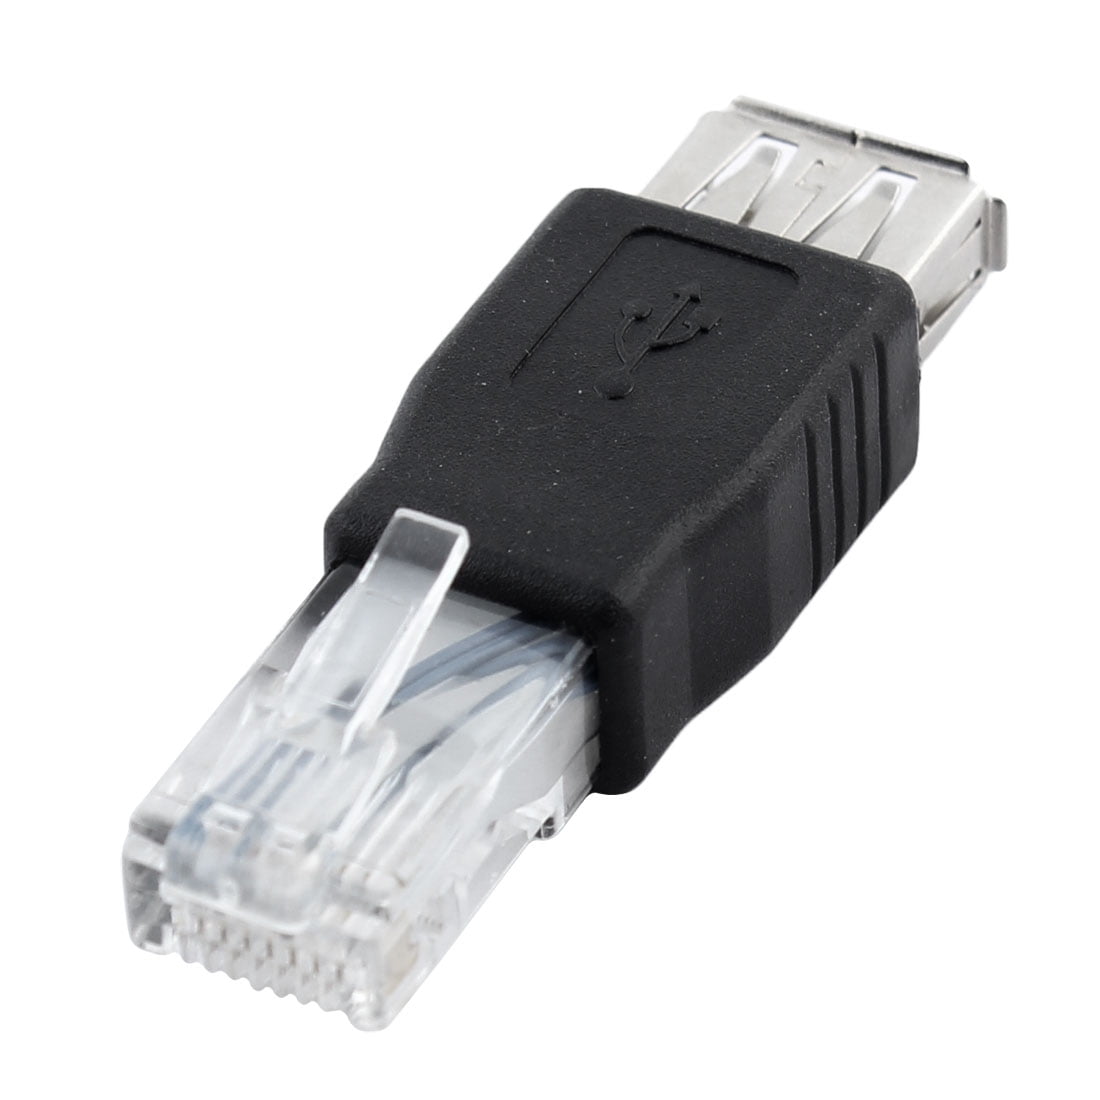 Unique 2.0 to RJ45 Male Ethernet Adapter Converter Connector Walmart.com